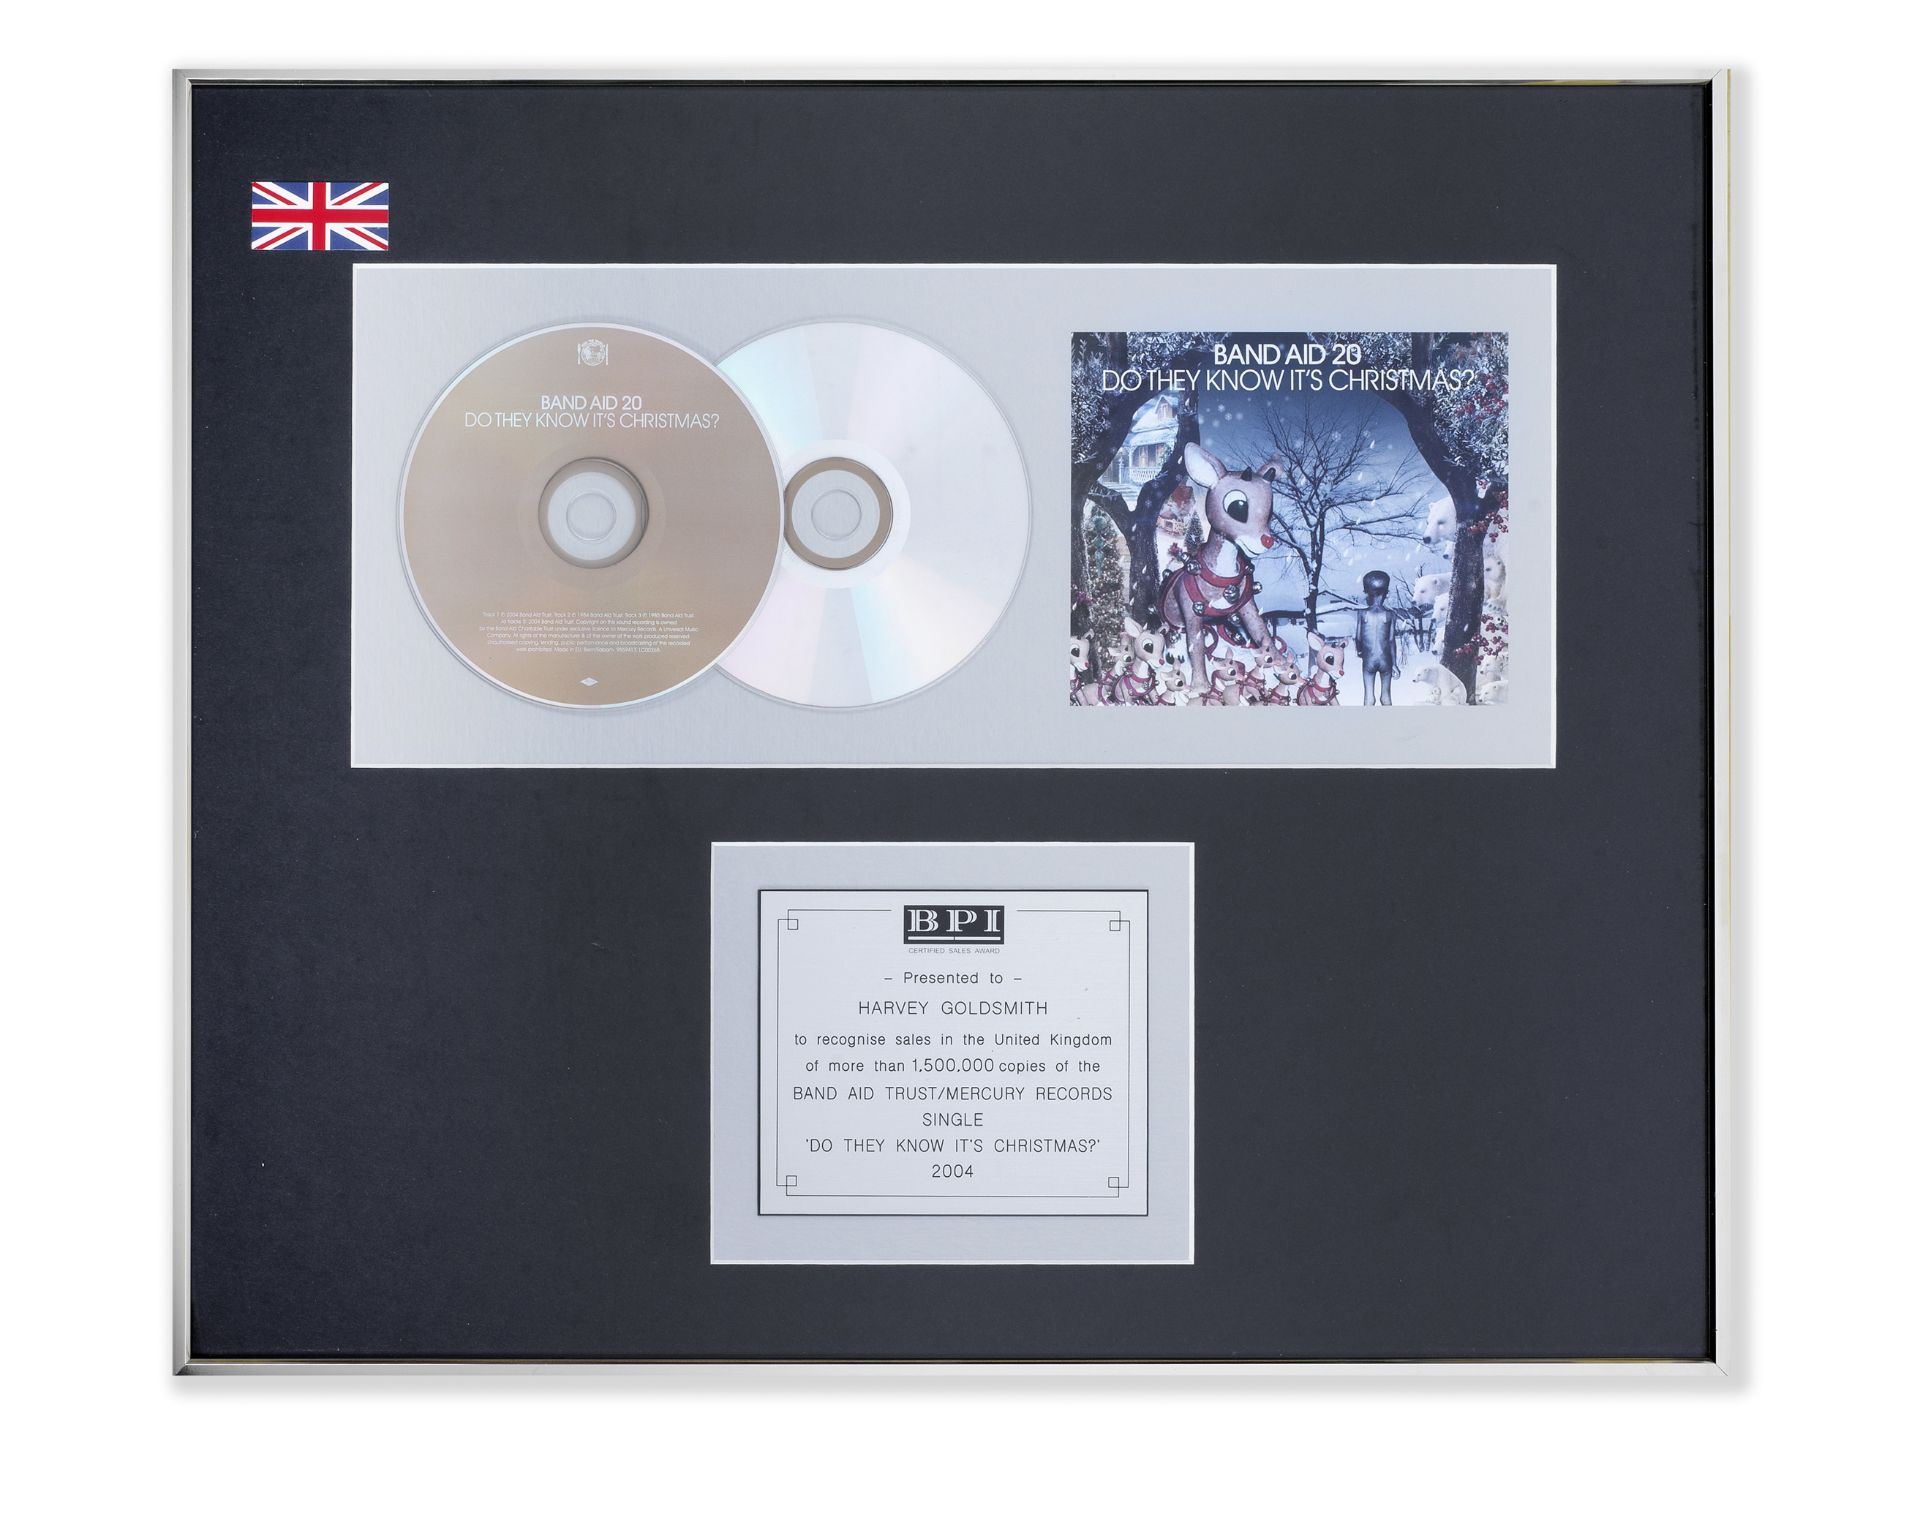 Band Aid: A double 'Platinum' BPI CD award, 2004,